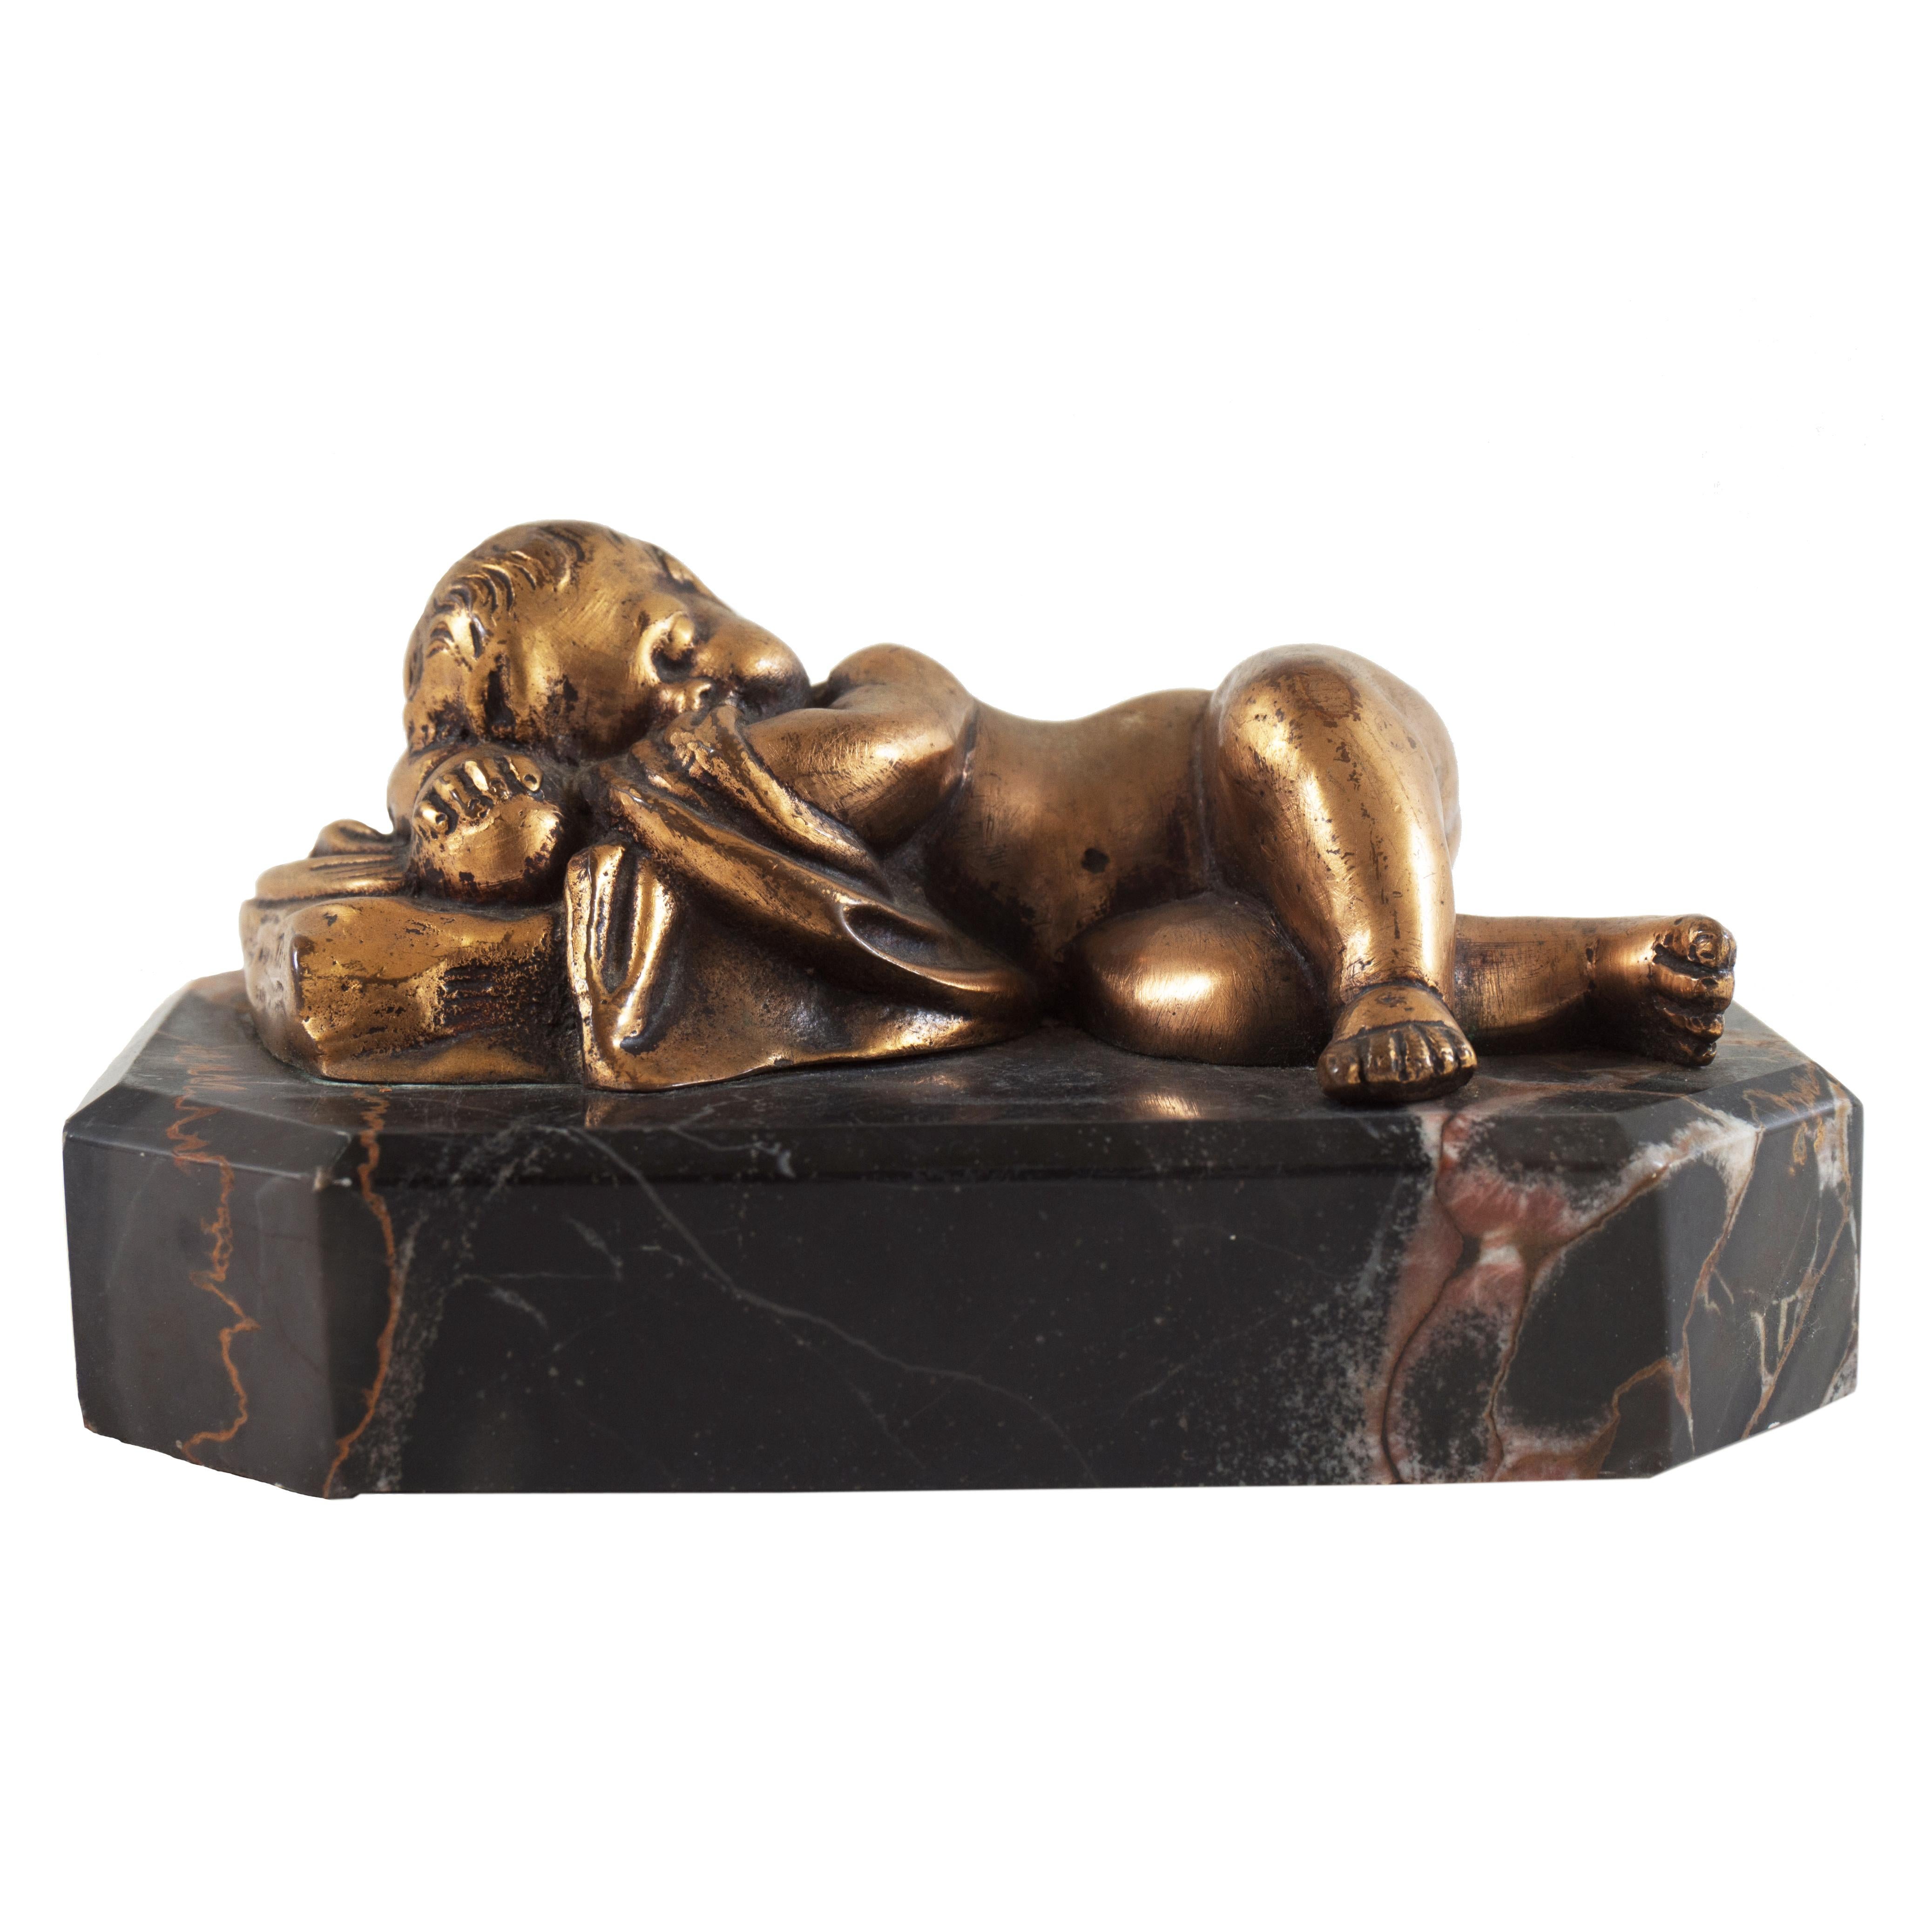  'Sleeping Cherub' Small Beaux Arts gilt-bronze sculpture on Portoro Marble Base - Sculpture by Unknown